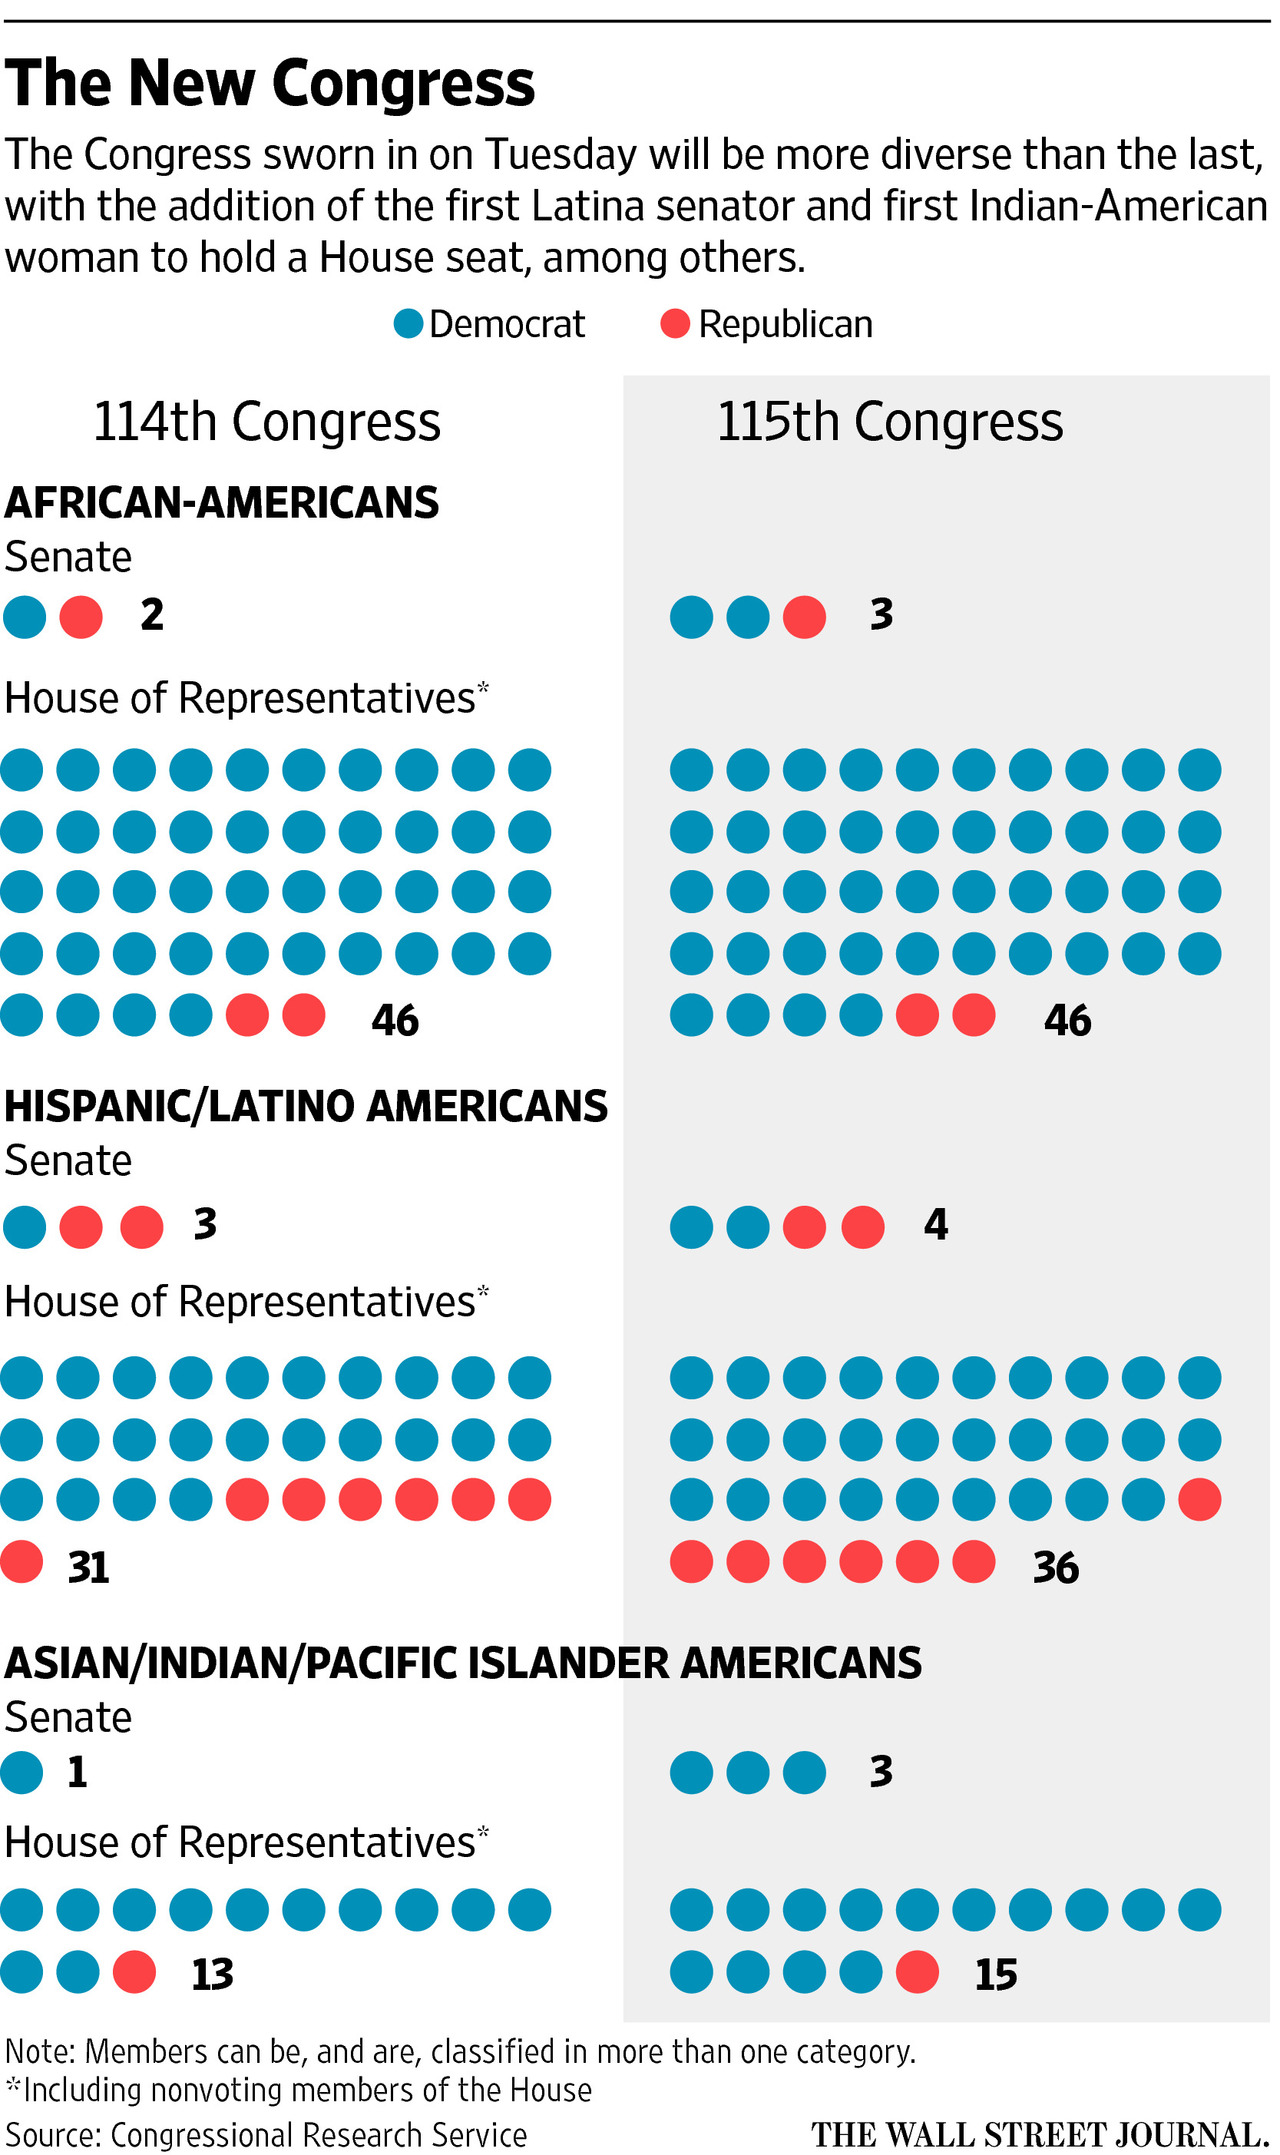 Congressional diversity